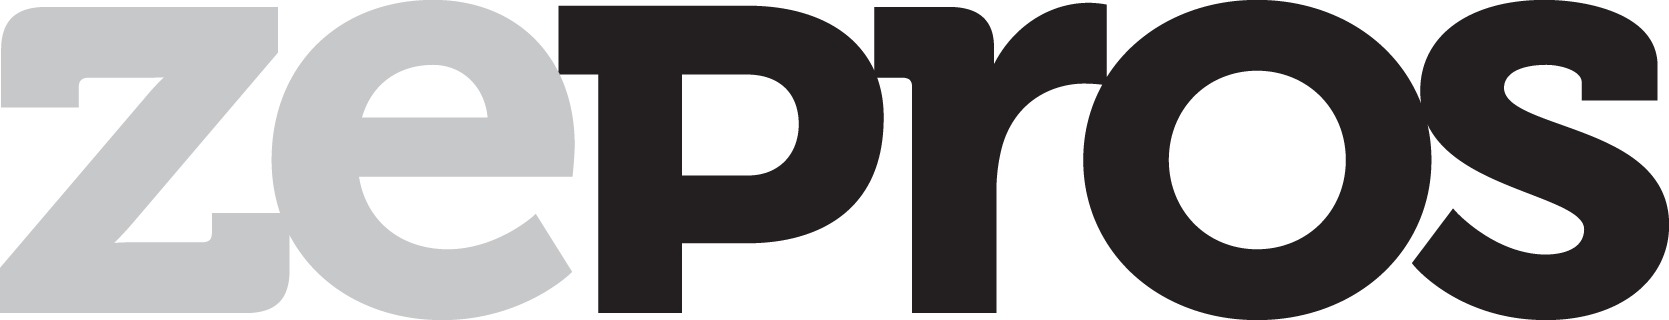 Logo Zepros